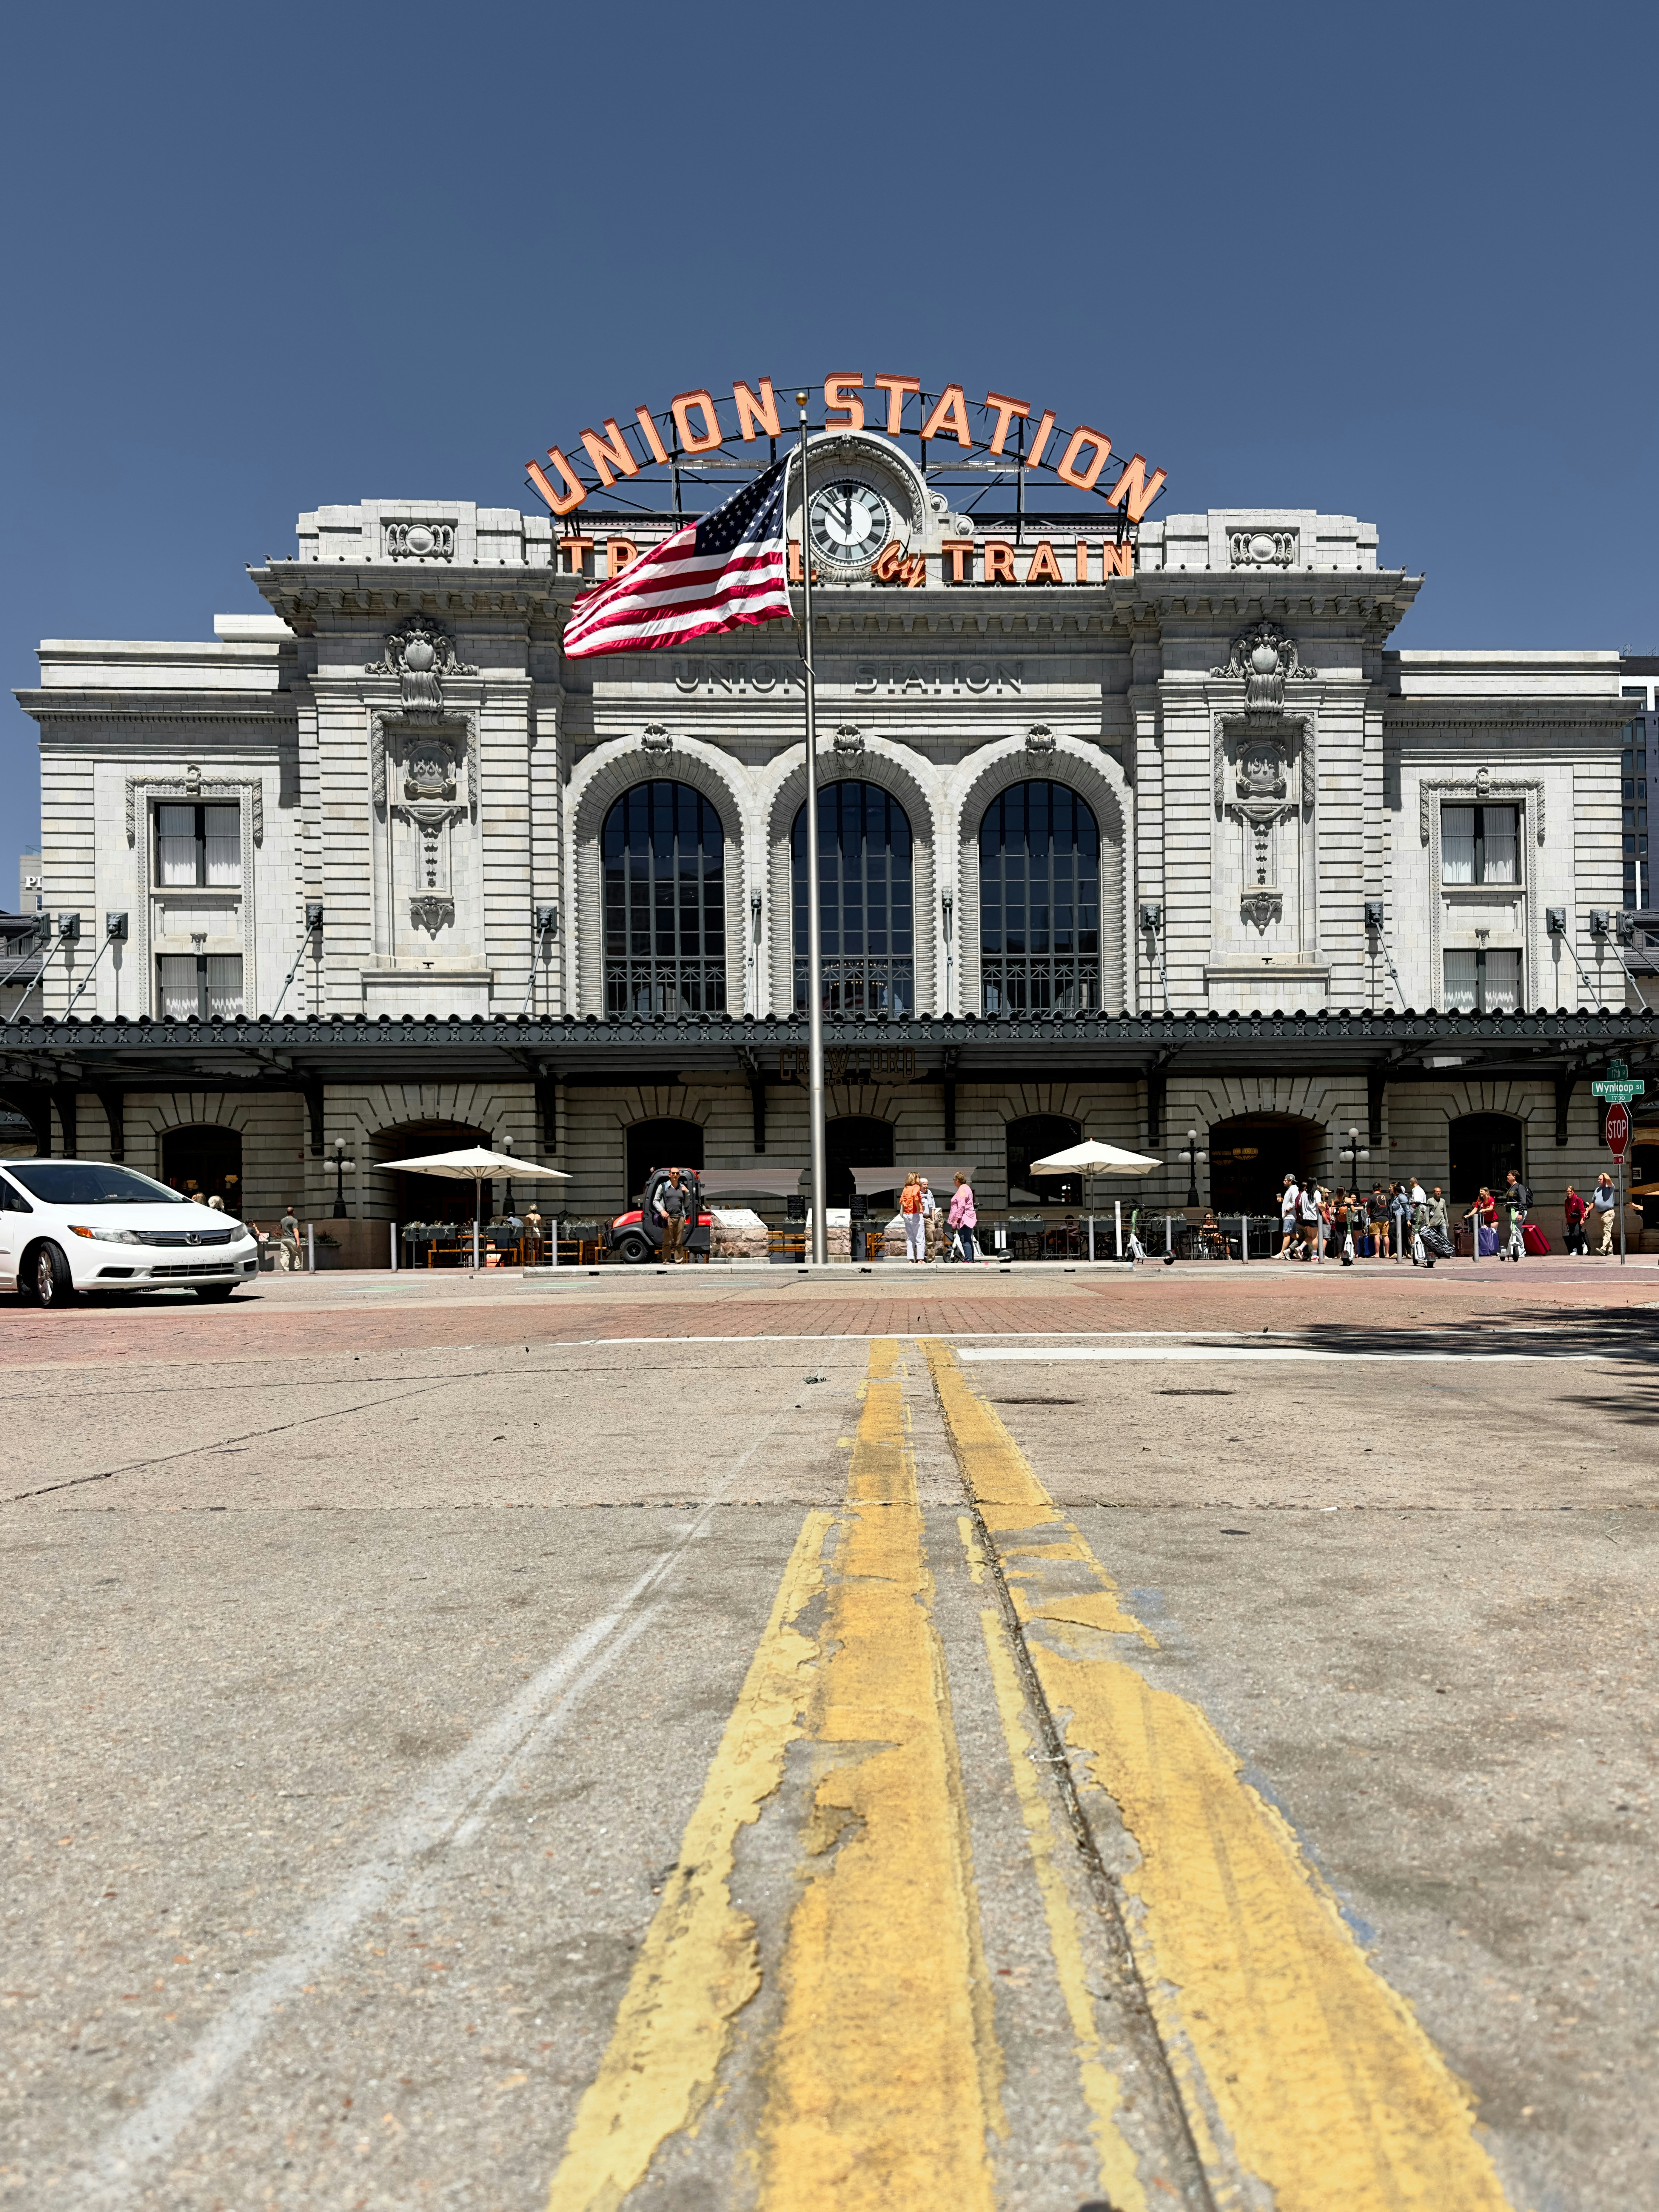 Denver’s Union Station